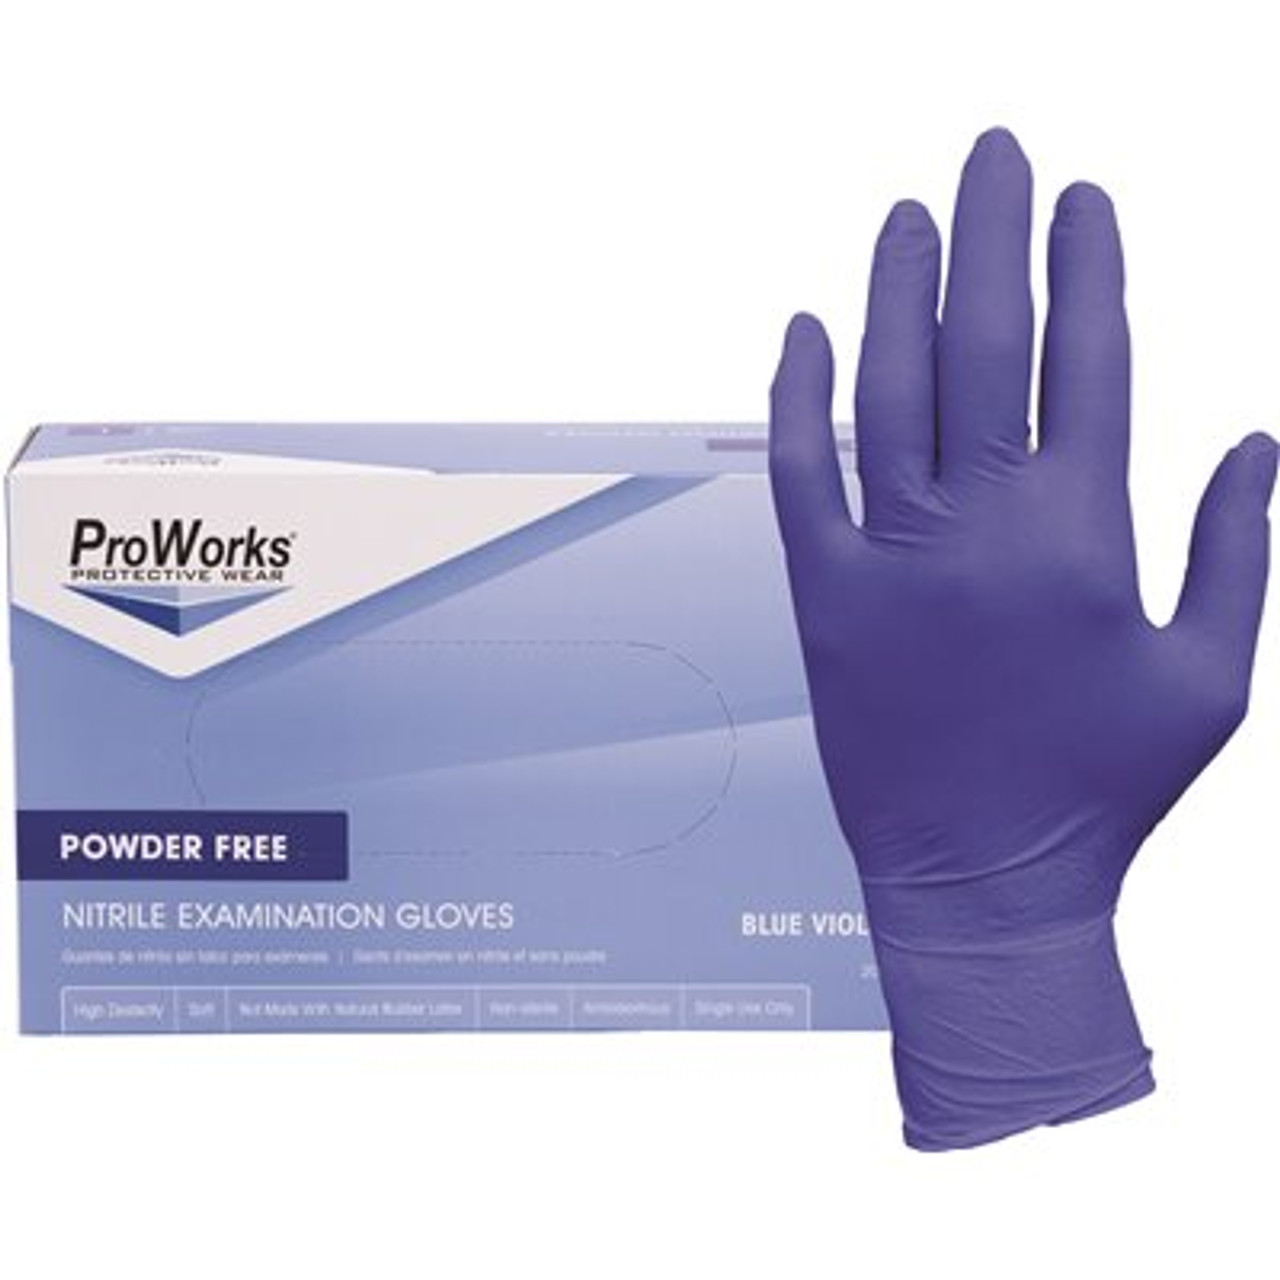 Large Powder Free Multi-Purpose Grape Nitrile Exam Gloves (200 per Box, 10 Boxes per Case)